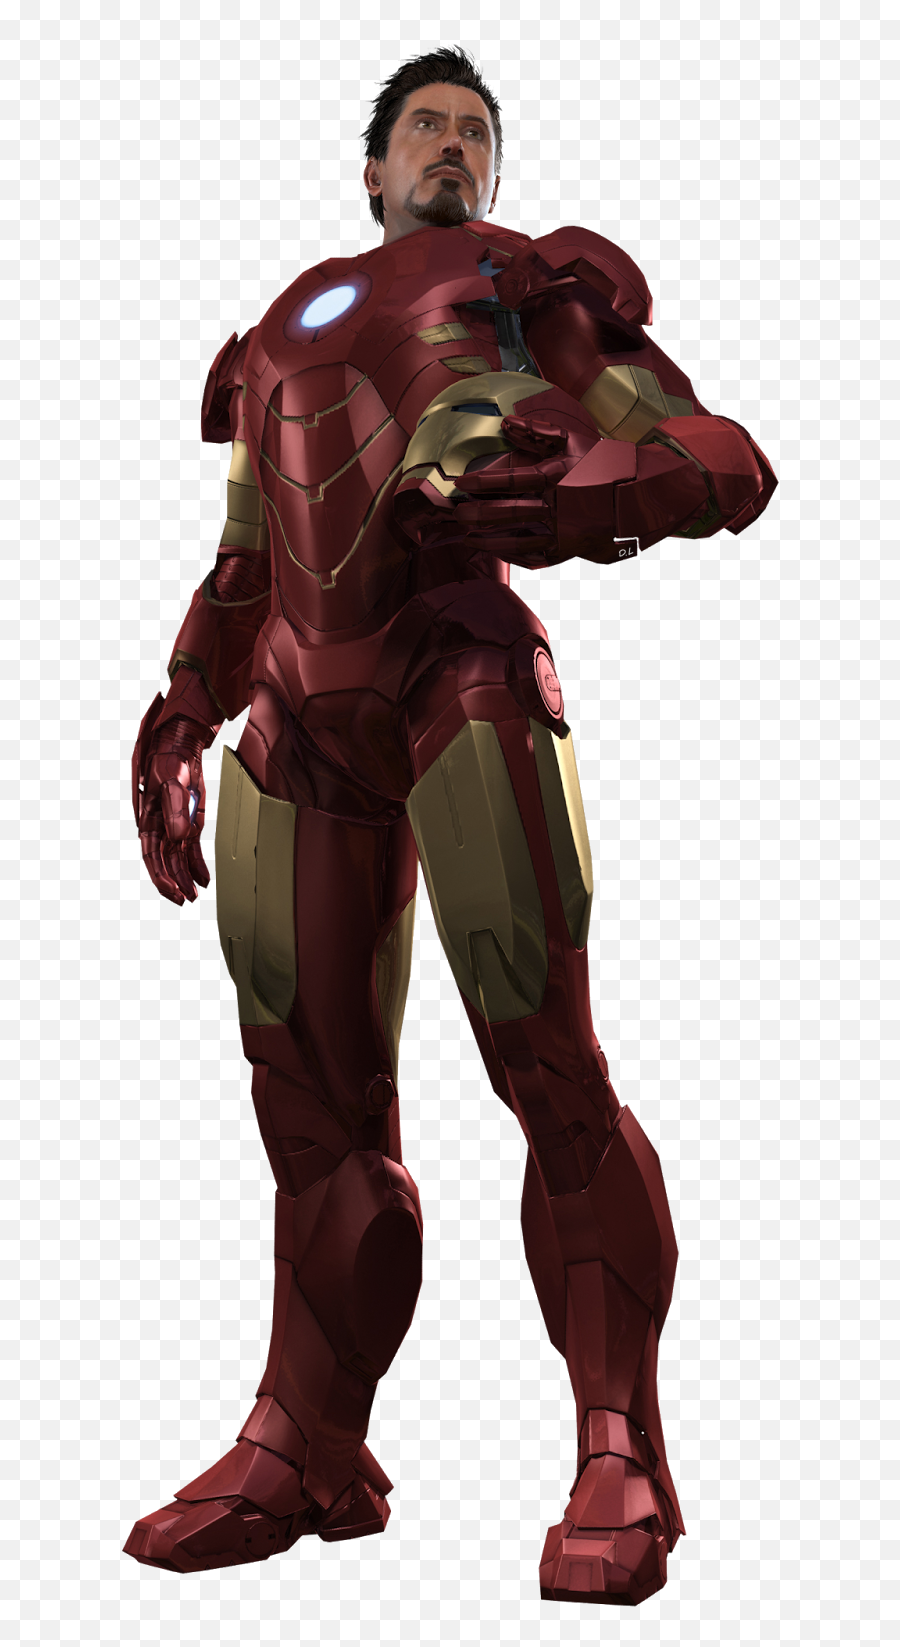 Download Hd Ironman Avengers Png Image - Tony Stark Iron Man Iron Man 2 Game Suits,Tony Stark Png